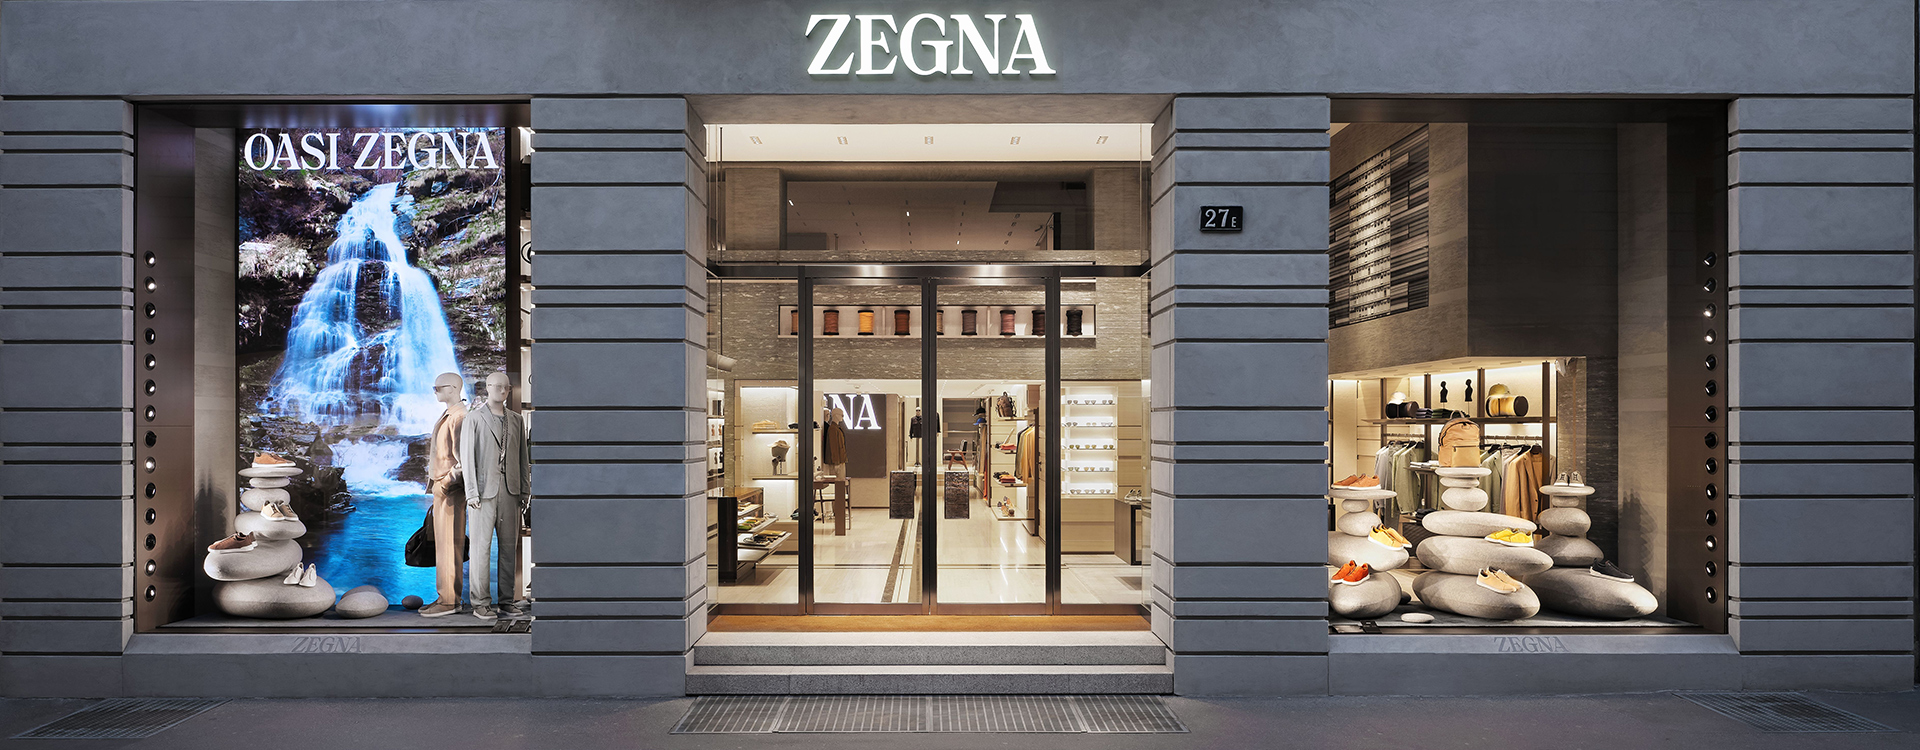 Bottega Veneta store re-opens in Pacific Place, Hong Kong - The